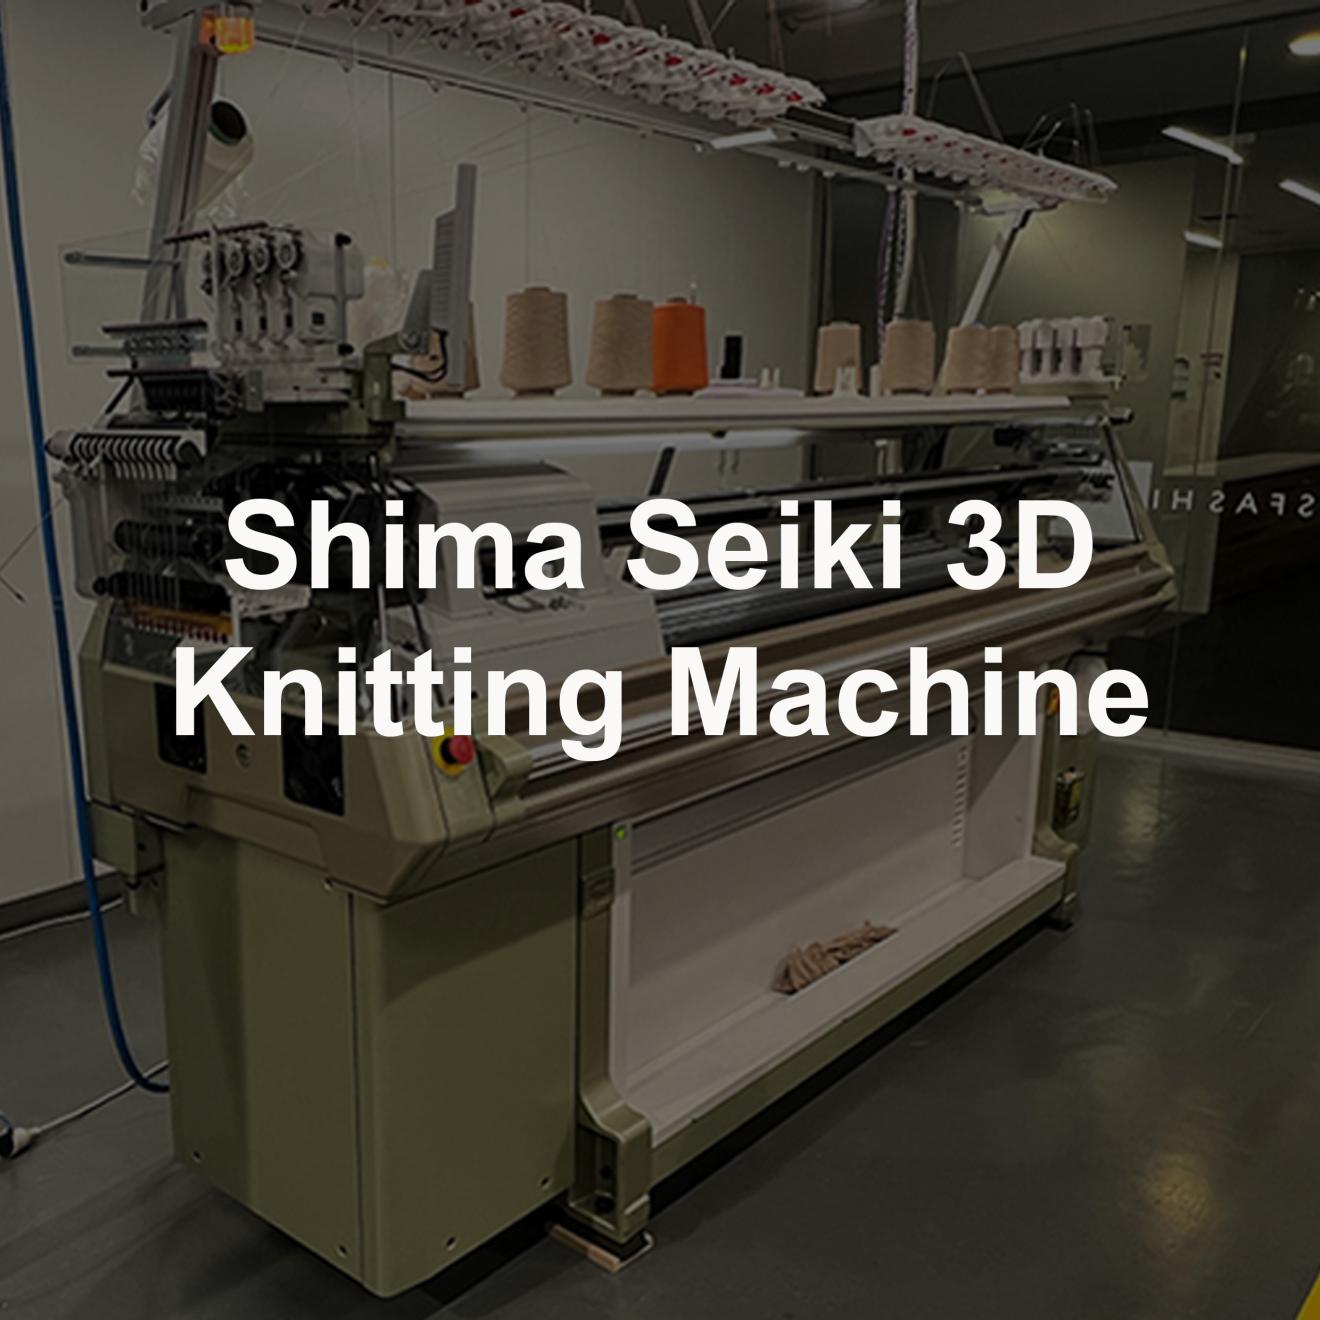 Shima Seiki 3D Knitting Machine